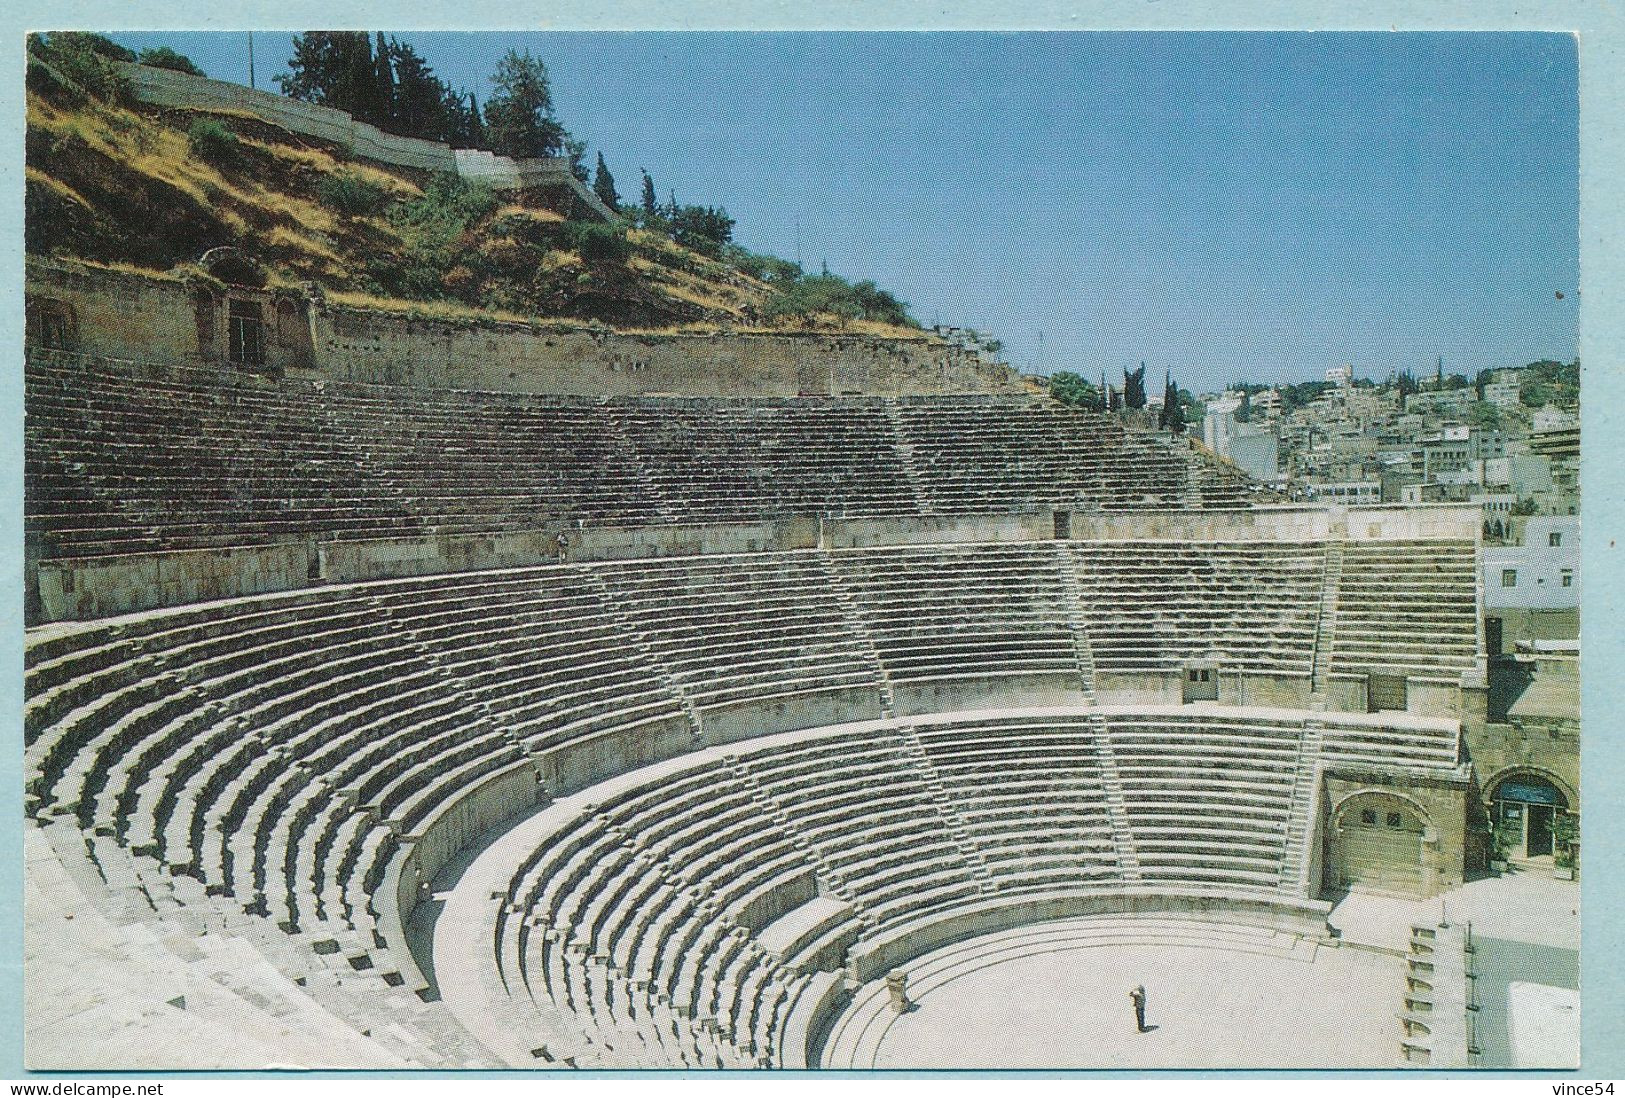 AMMAN - Roman Theatre - Jordan